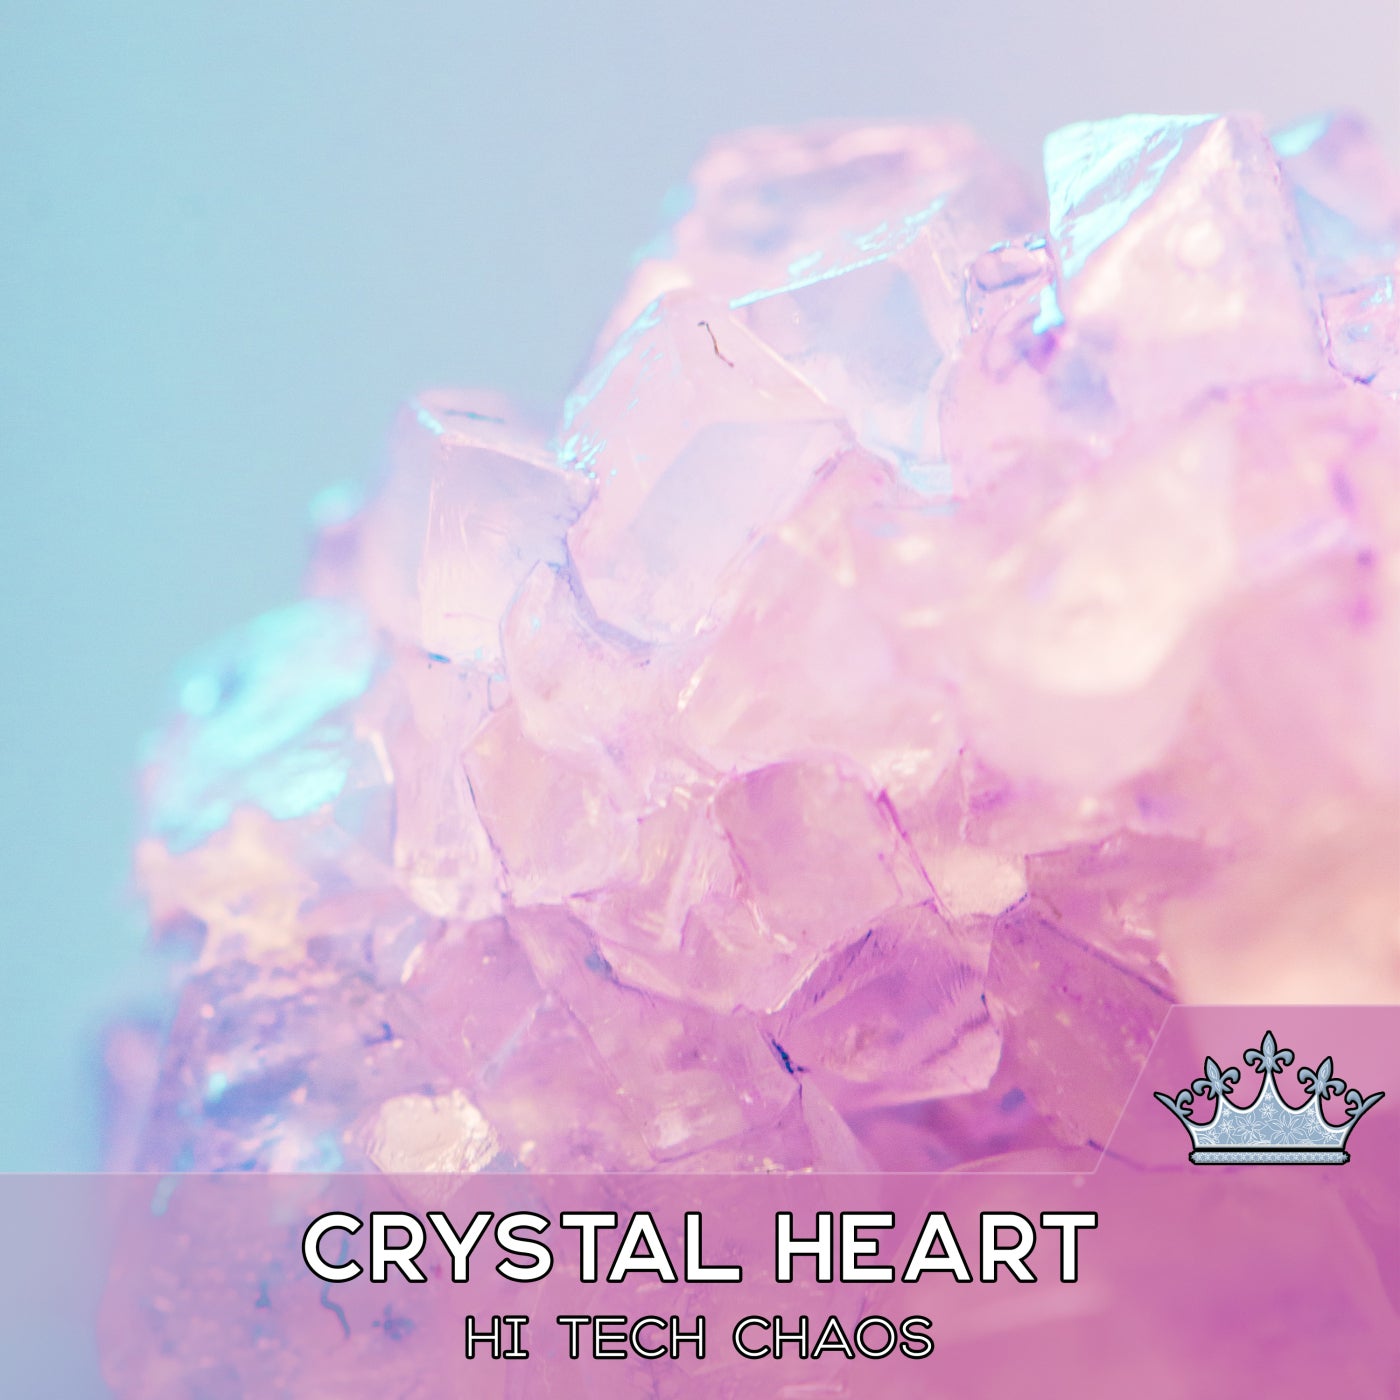 Hi Tech Chaos - Crystal Heart [DNA130]